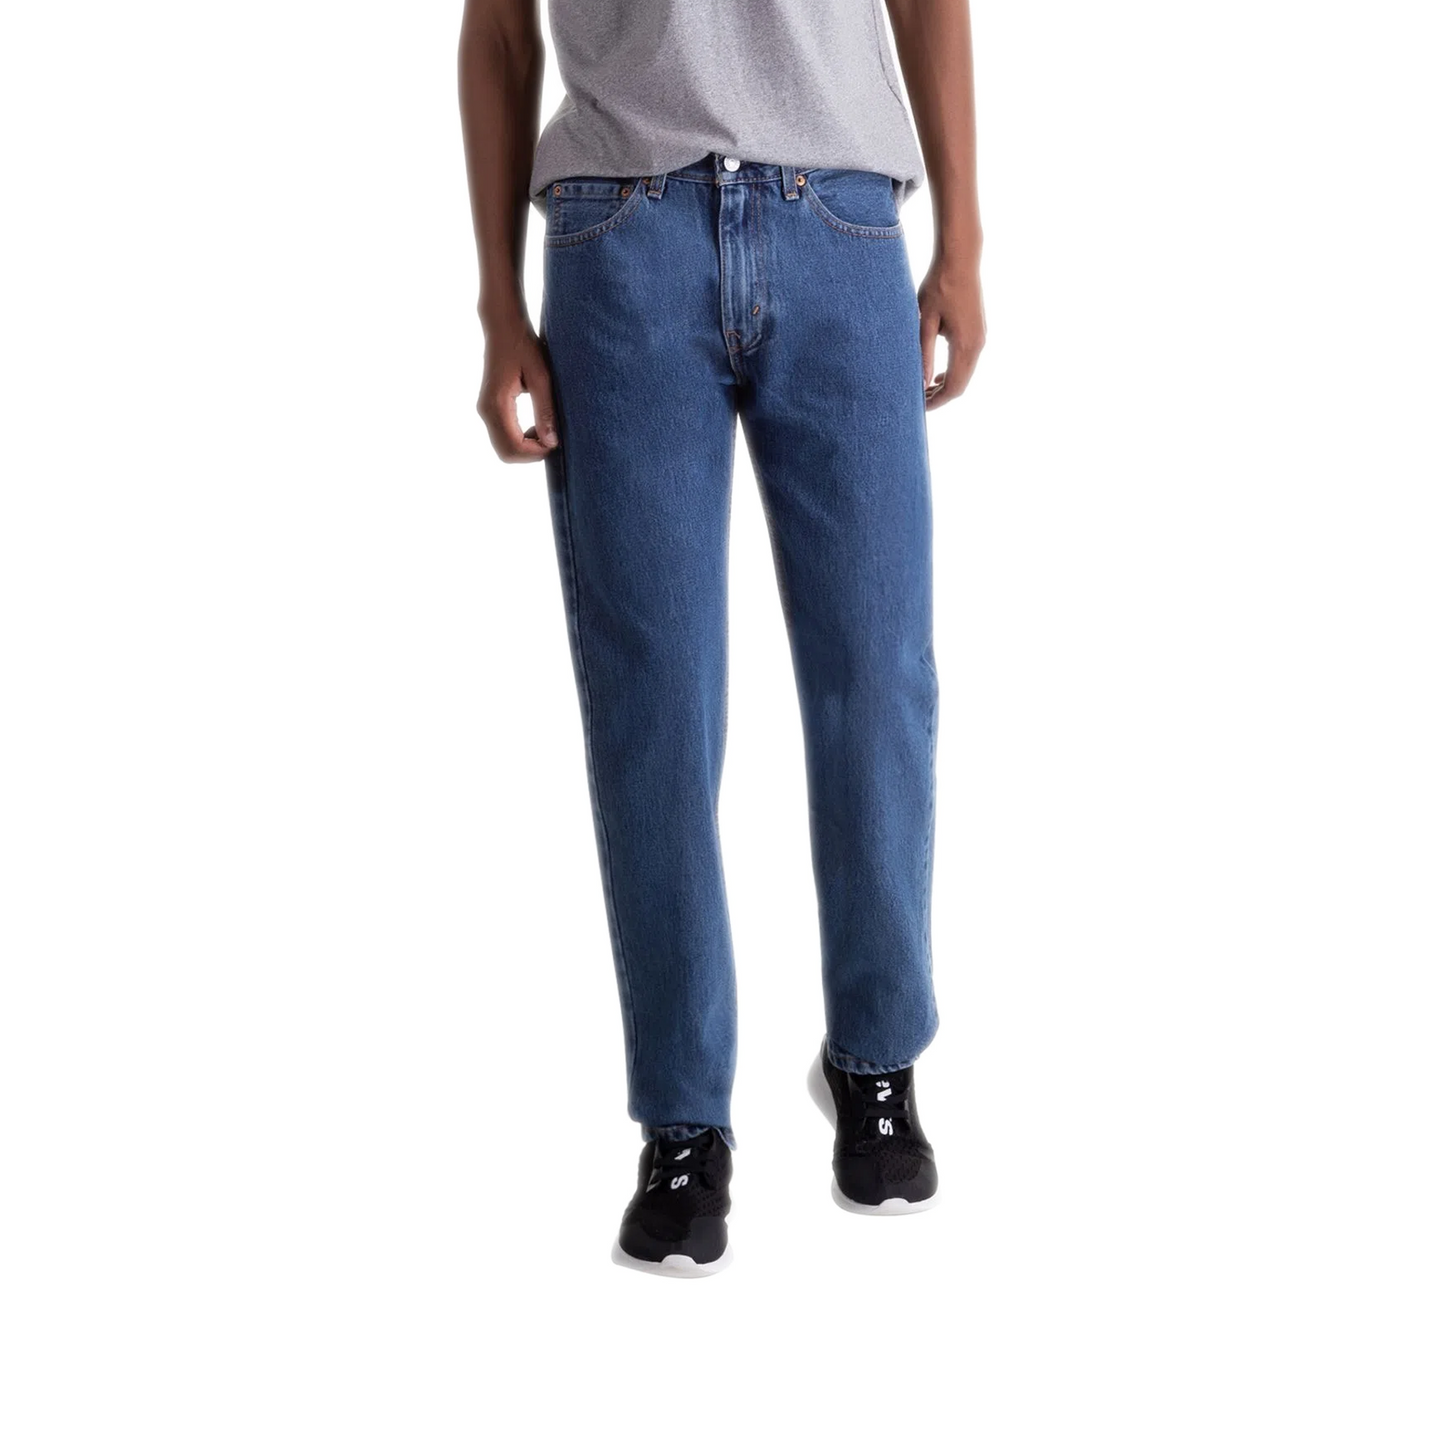 Men's Levi's 505 Regular Fit Jean - Medium Wash